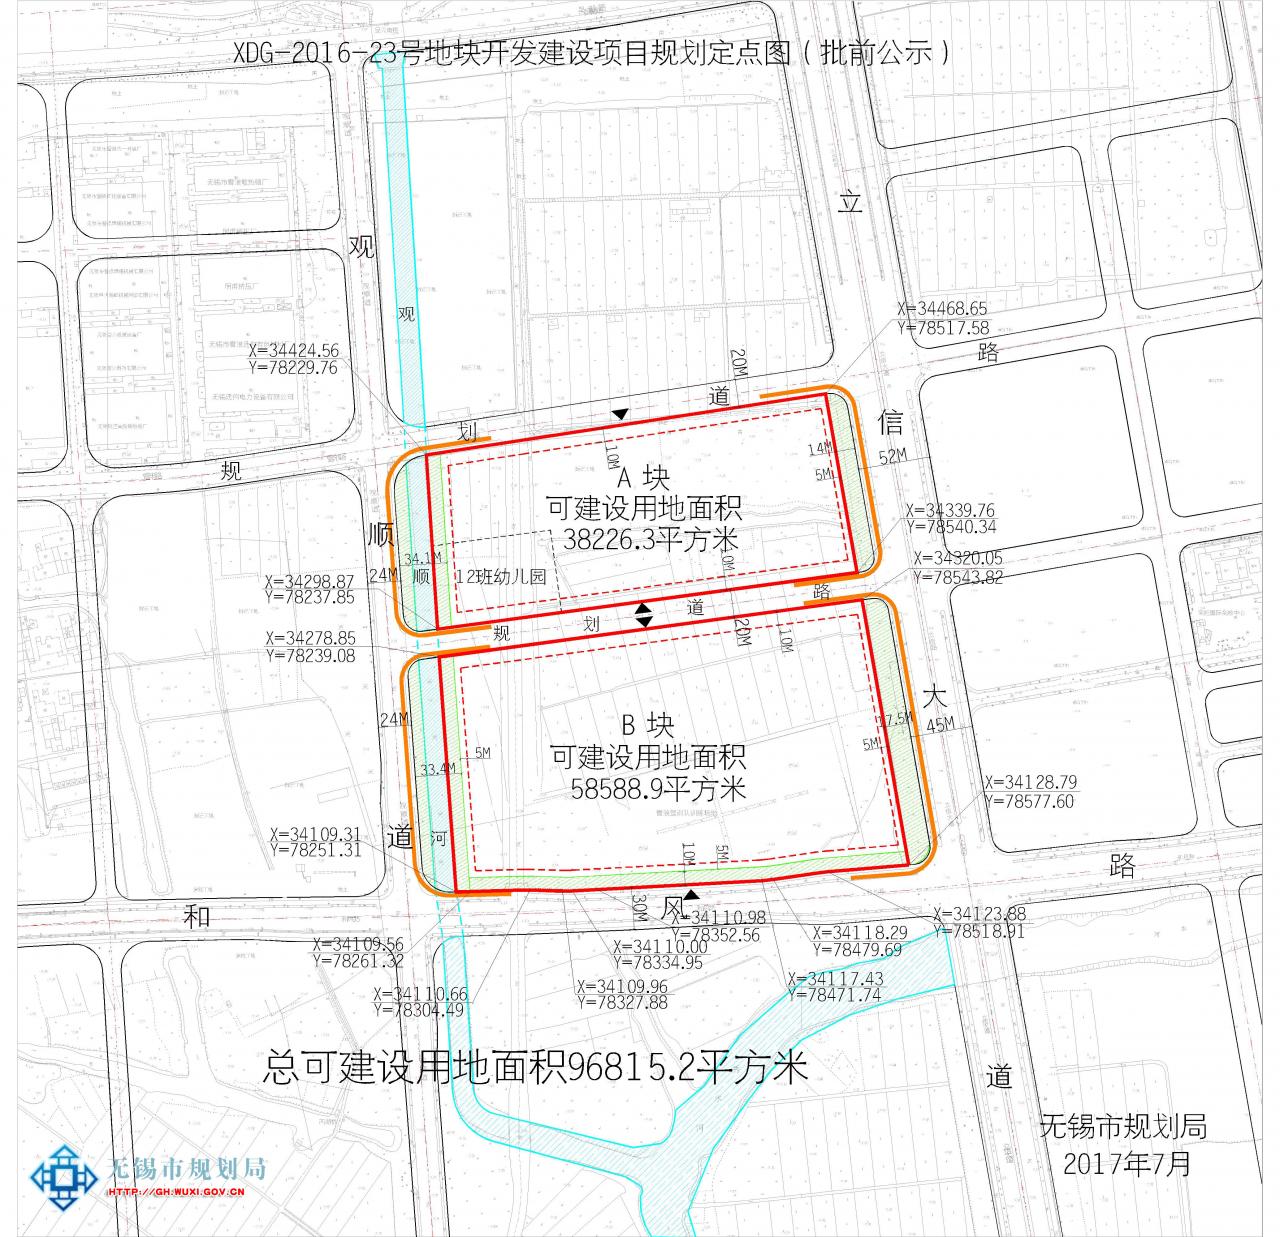 XDG-2016-23号地块开发建设项目建设用地规划许可证批前公示